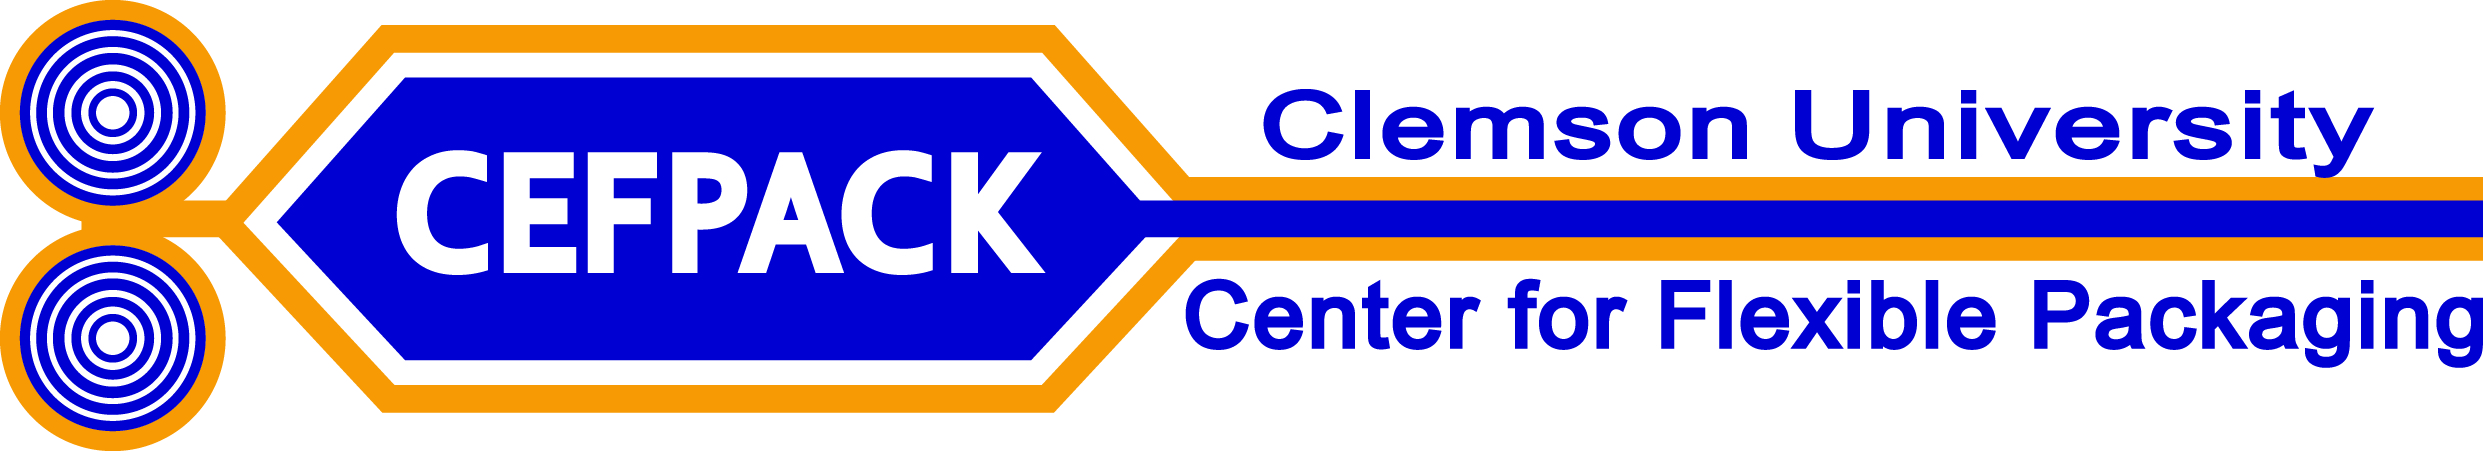 cefpack logo